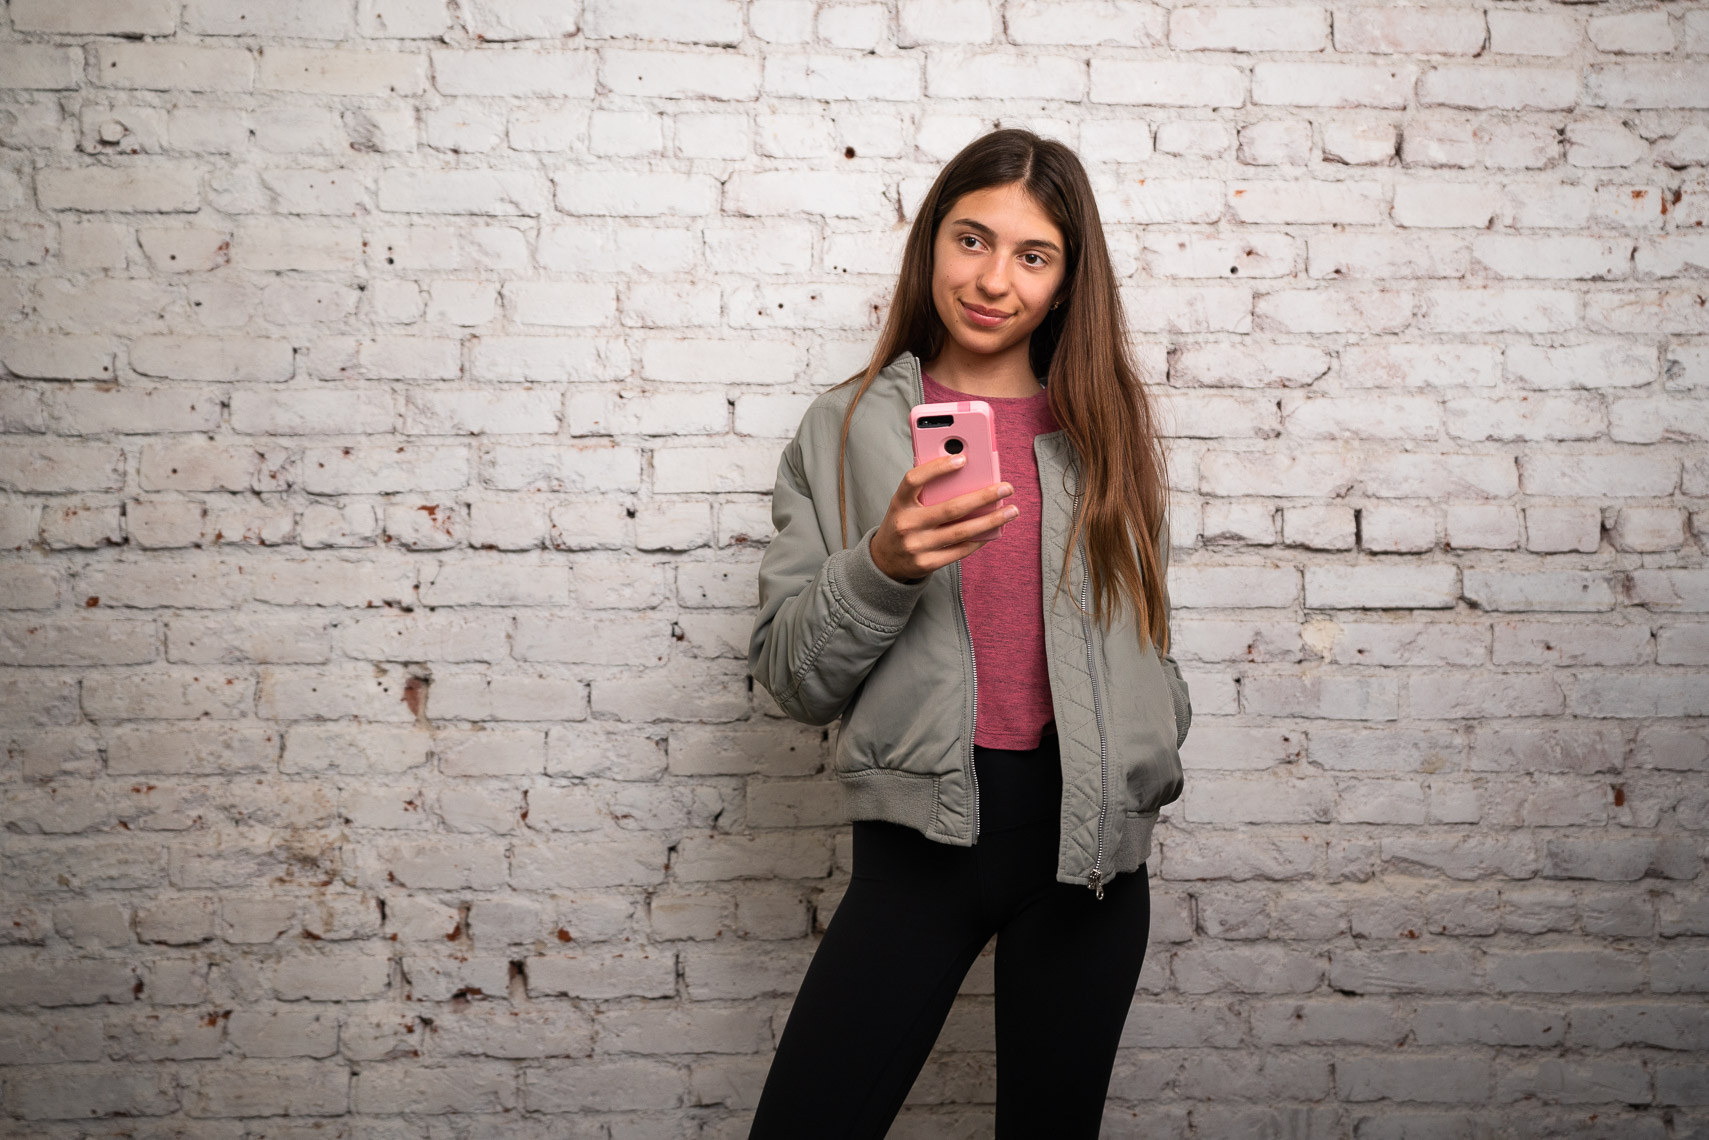 Avast - Tween on Smart Phone Brick Backdrop